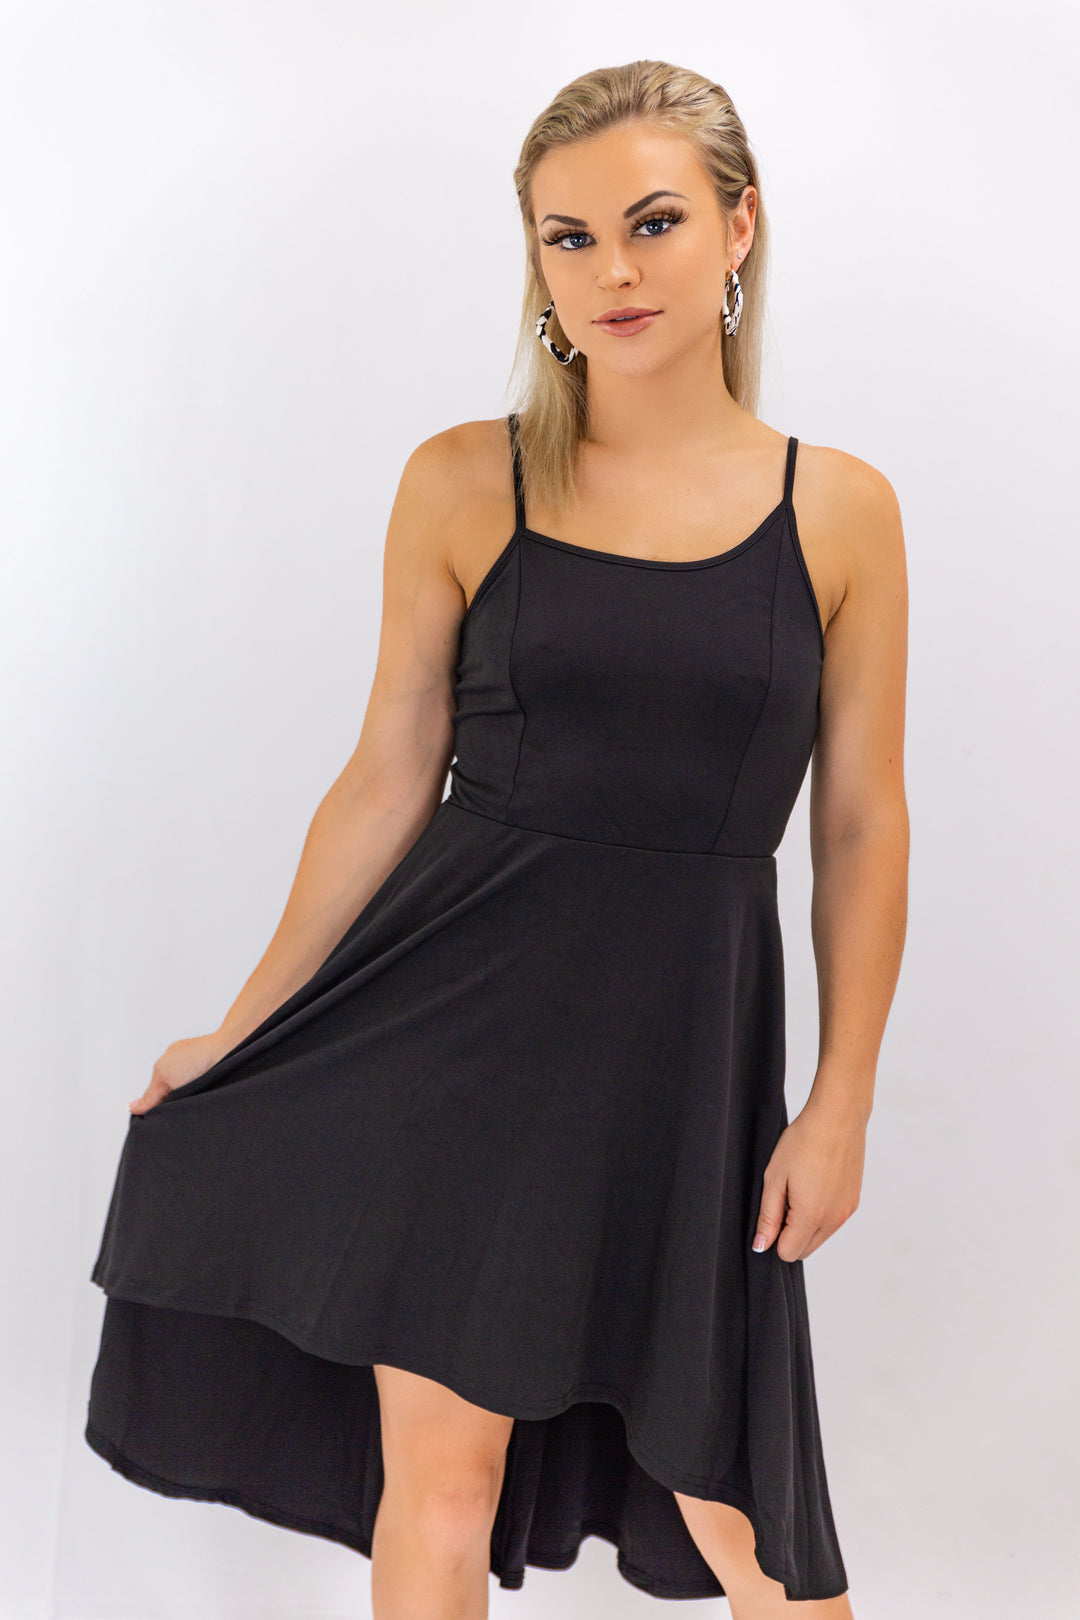 Fabonics Black Cascade Sleeveless Swing Mini Dress with Asymmetric Hem for Stylish Comfort